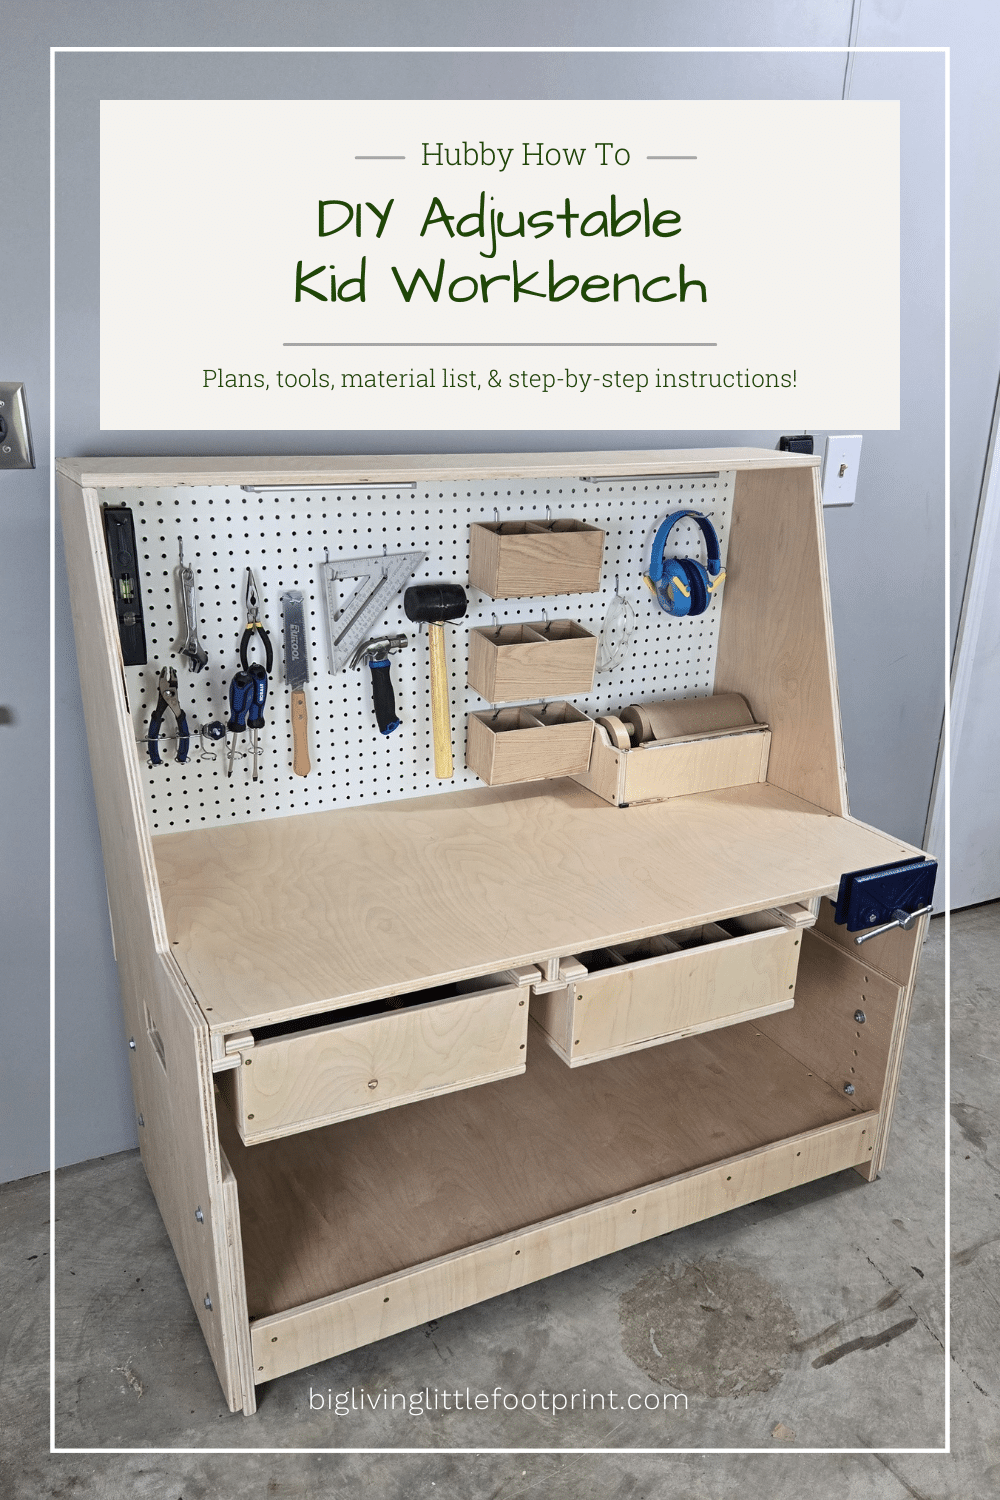 Hubby How To: DIY Adjustable Kid’s Workbench